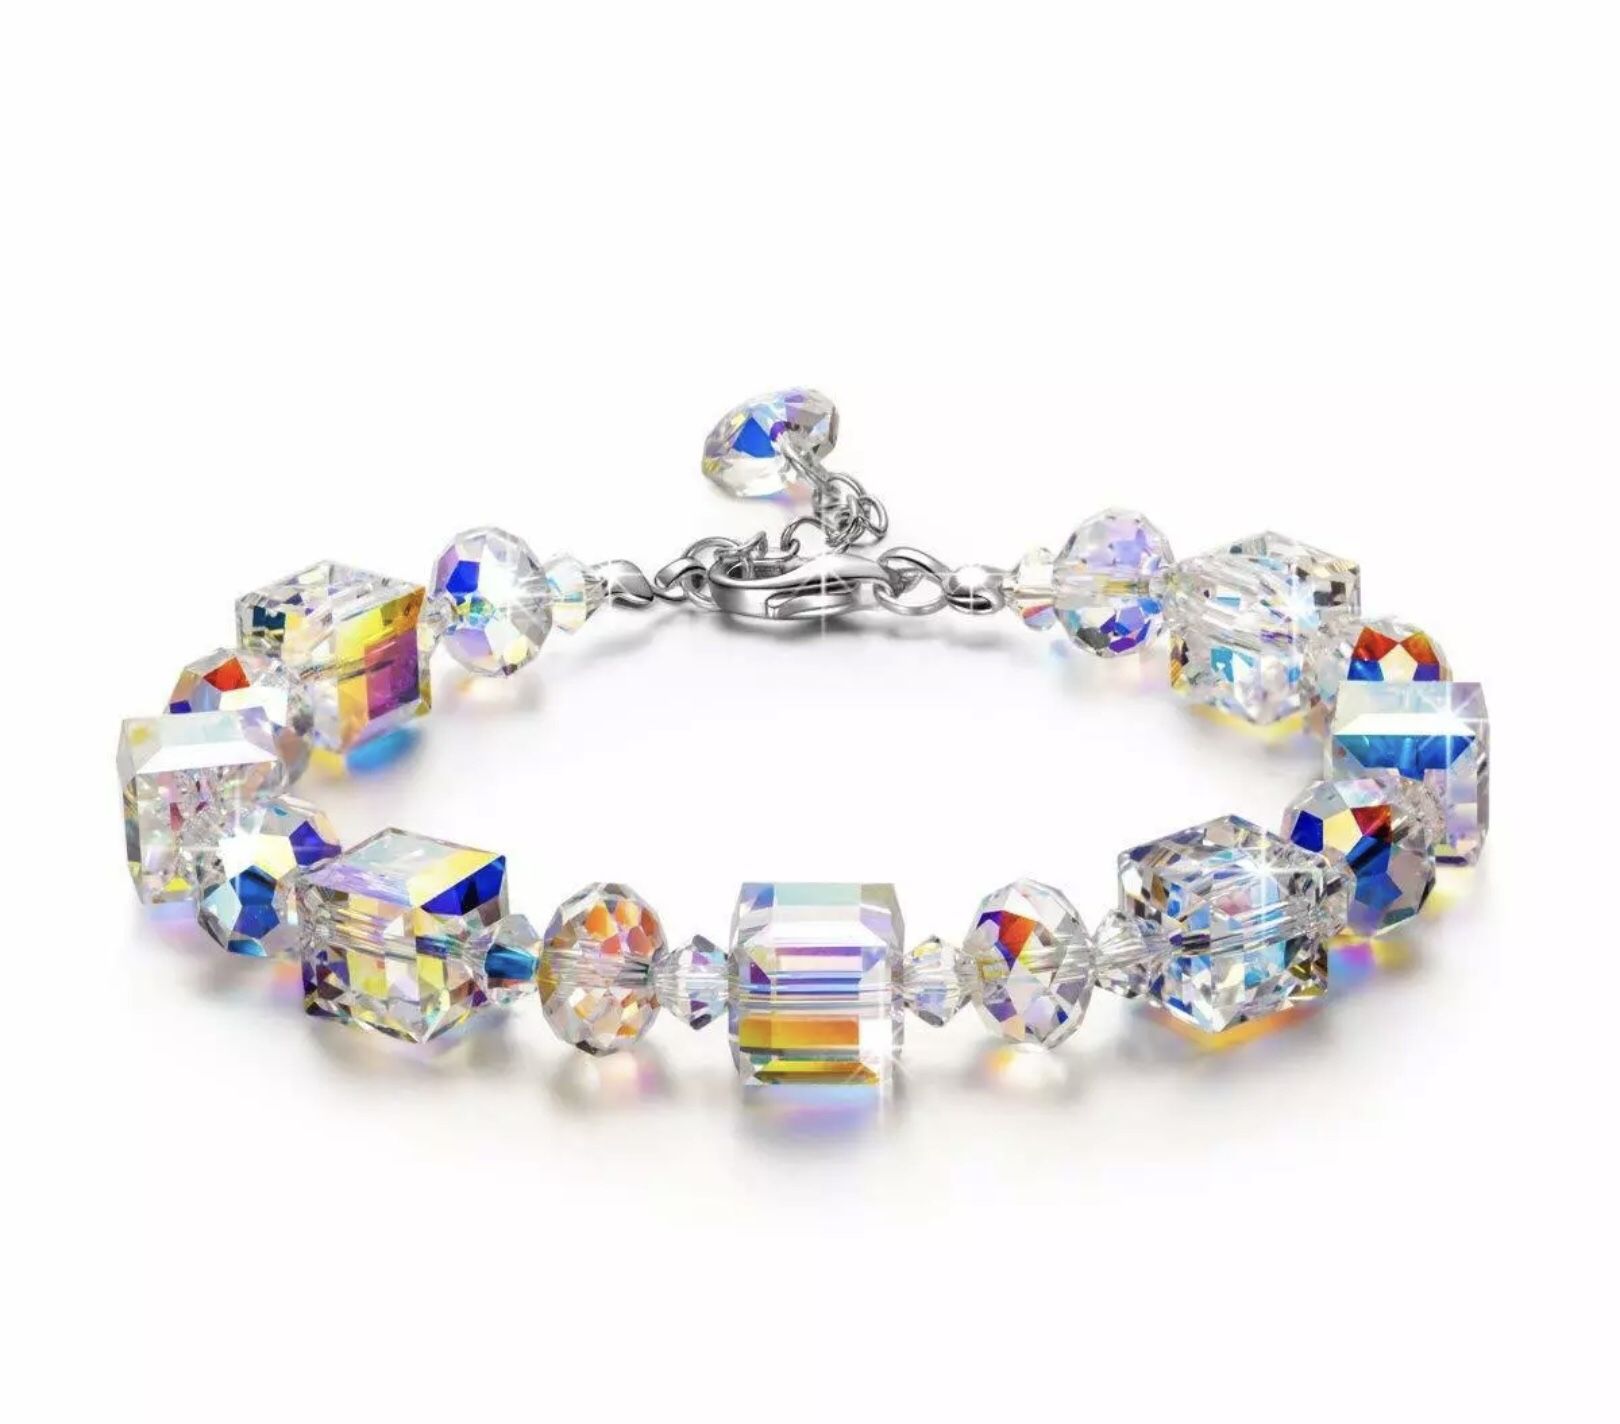 Aurora Borealis ratals Beads Bracelet